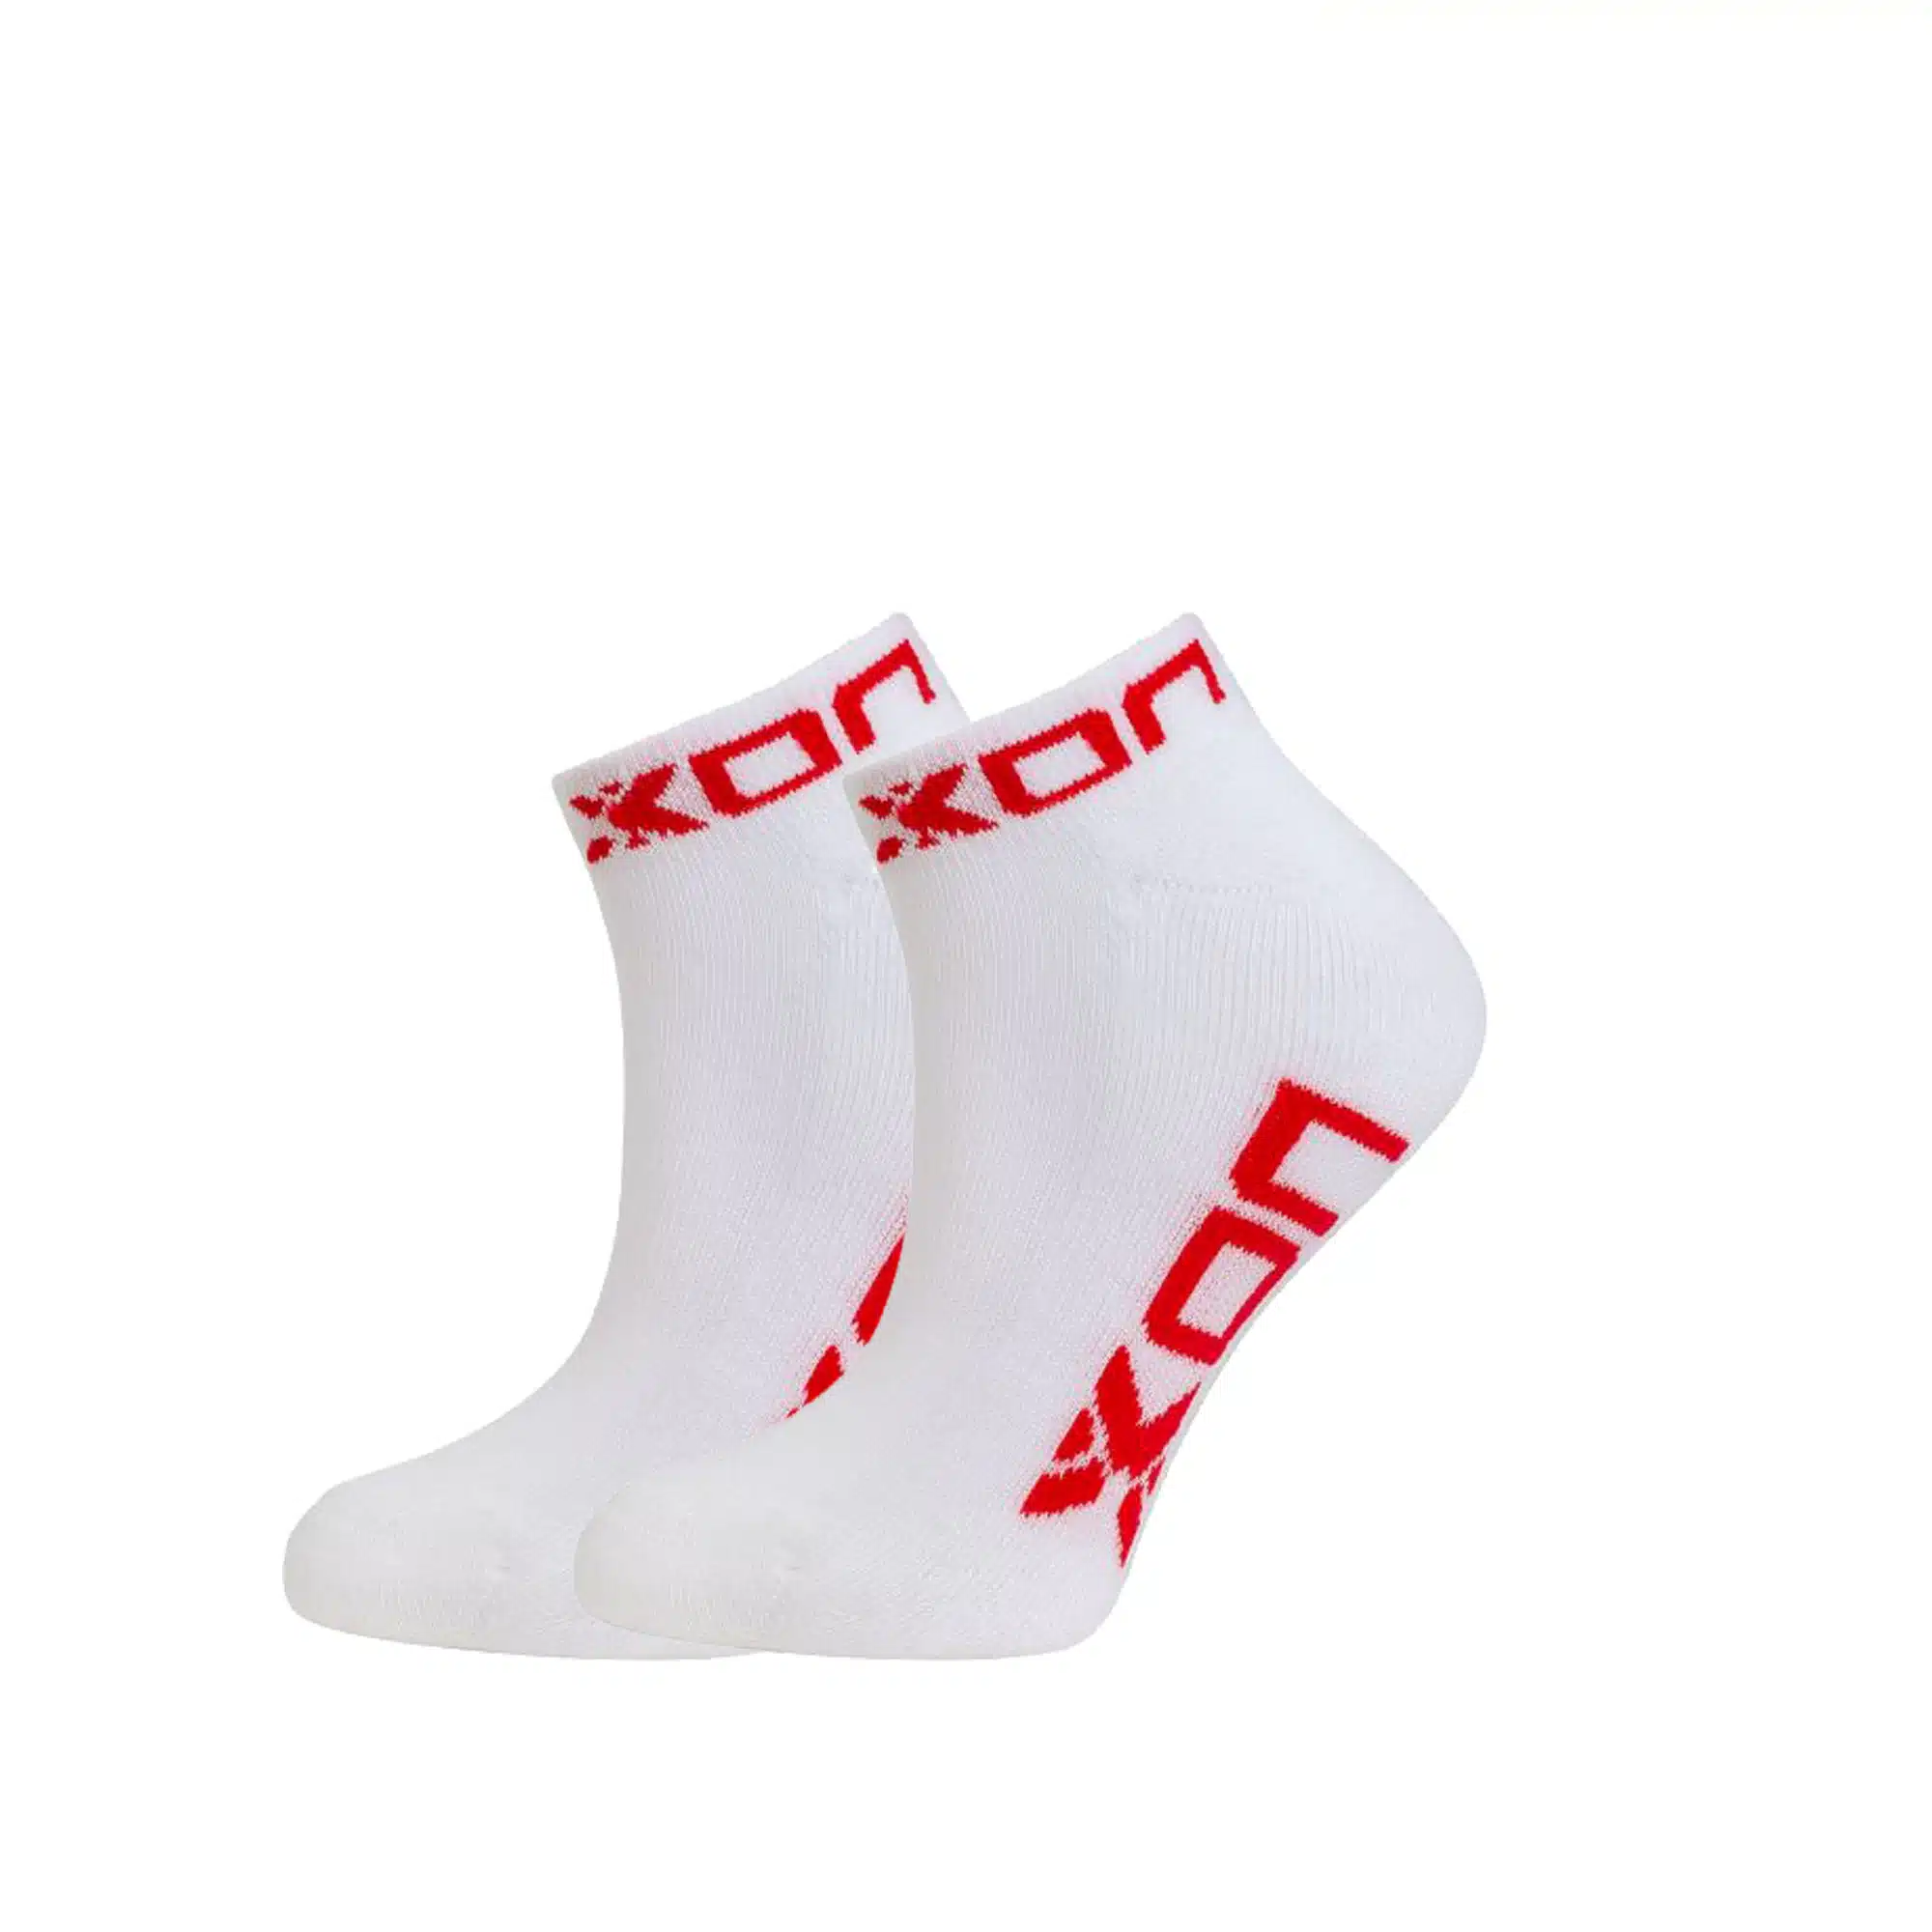 NOX Socks Ankle Length White Red